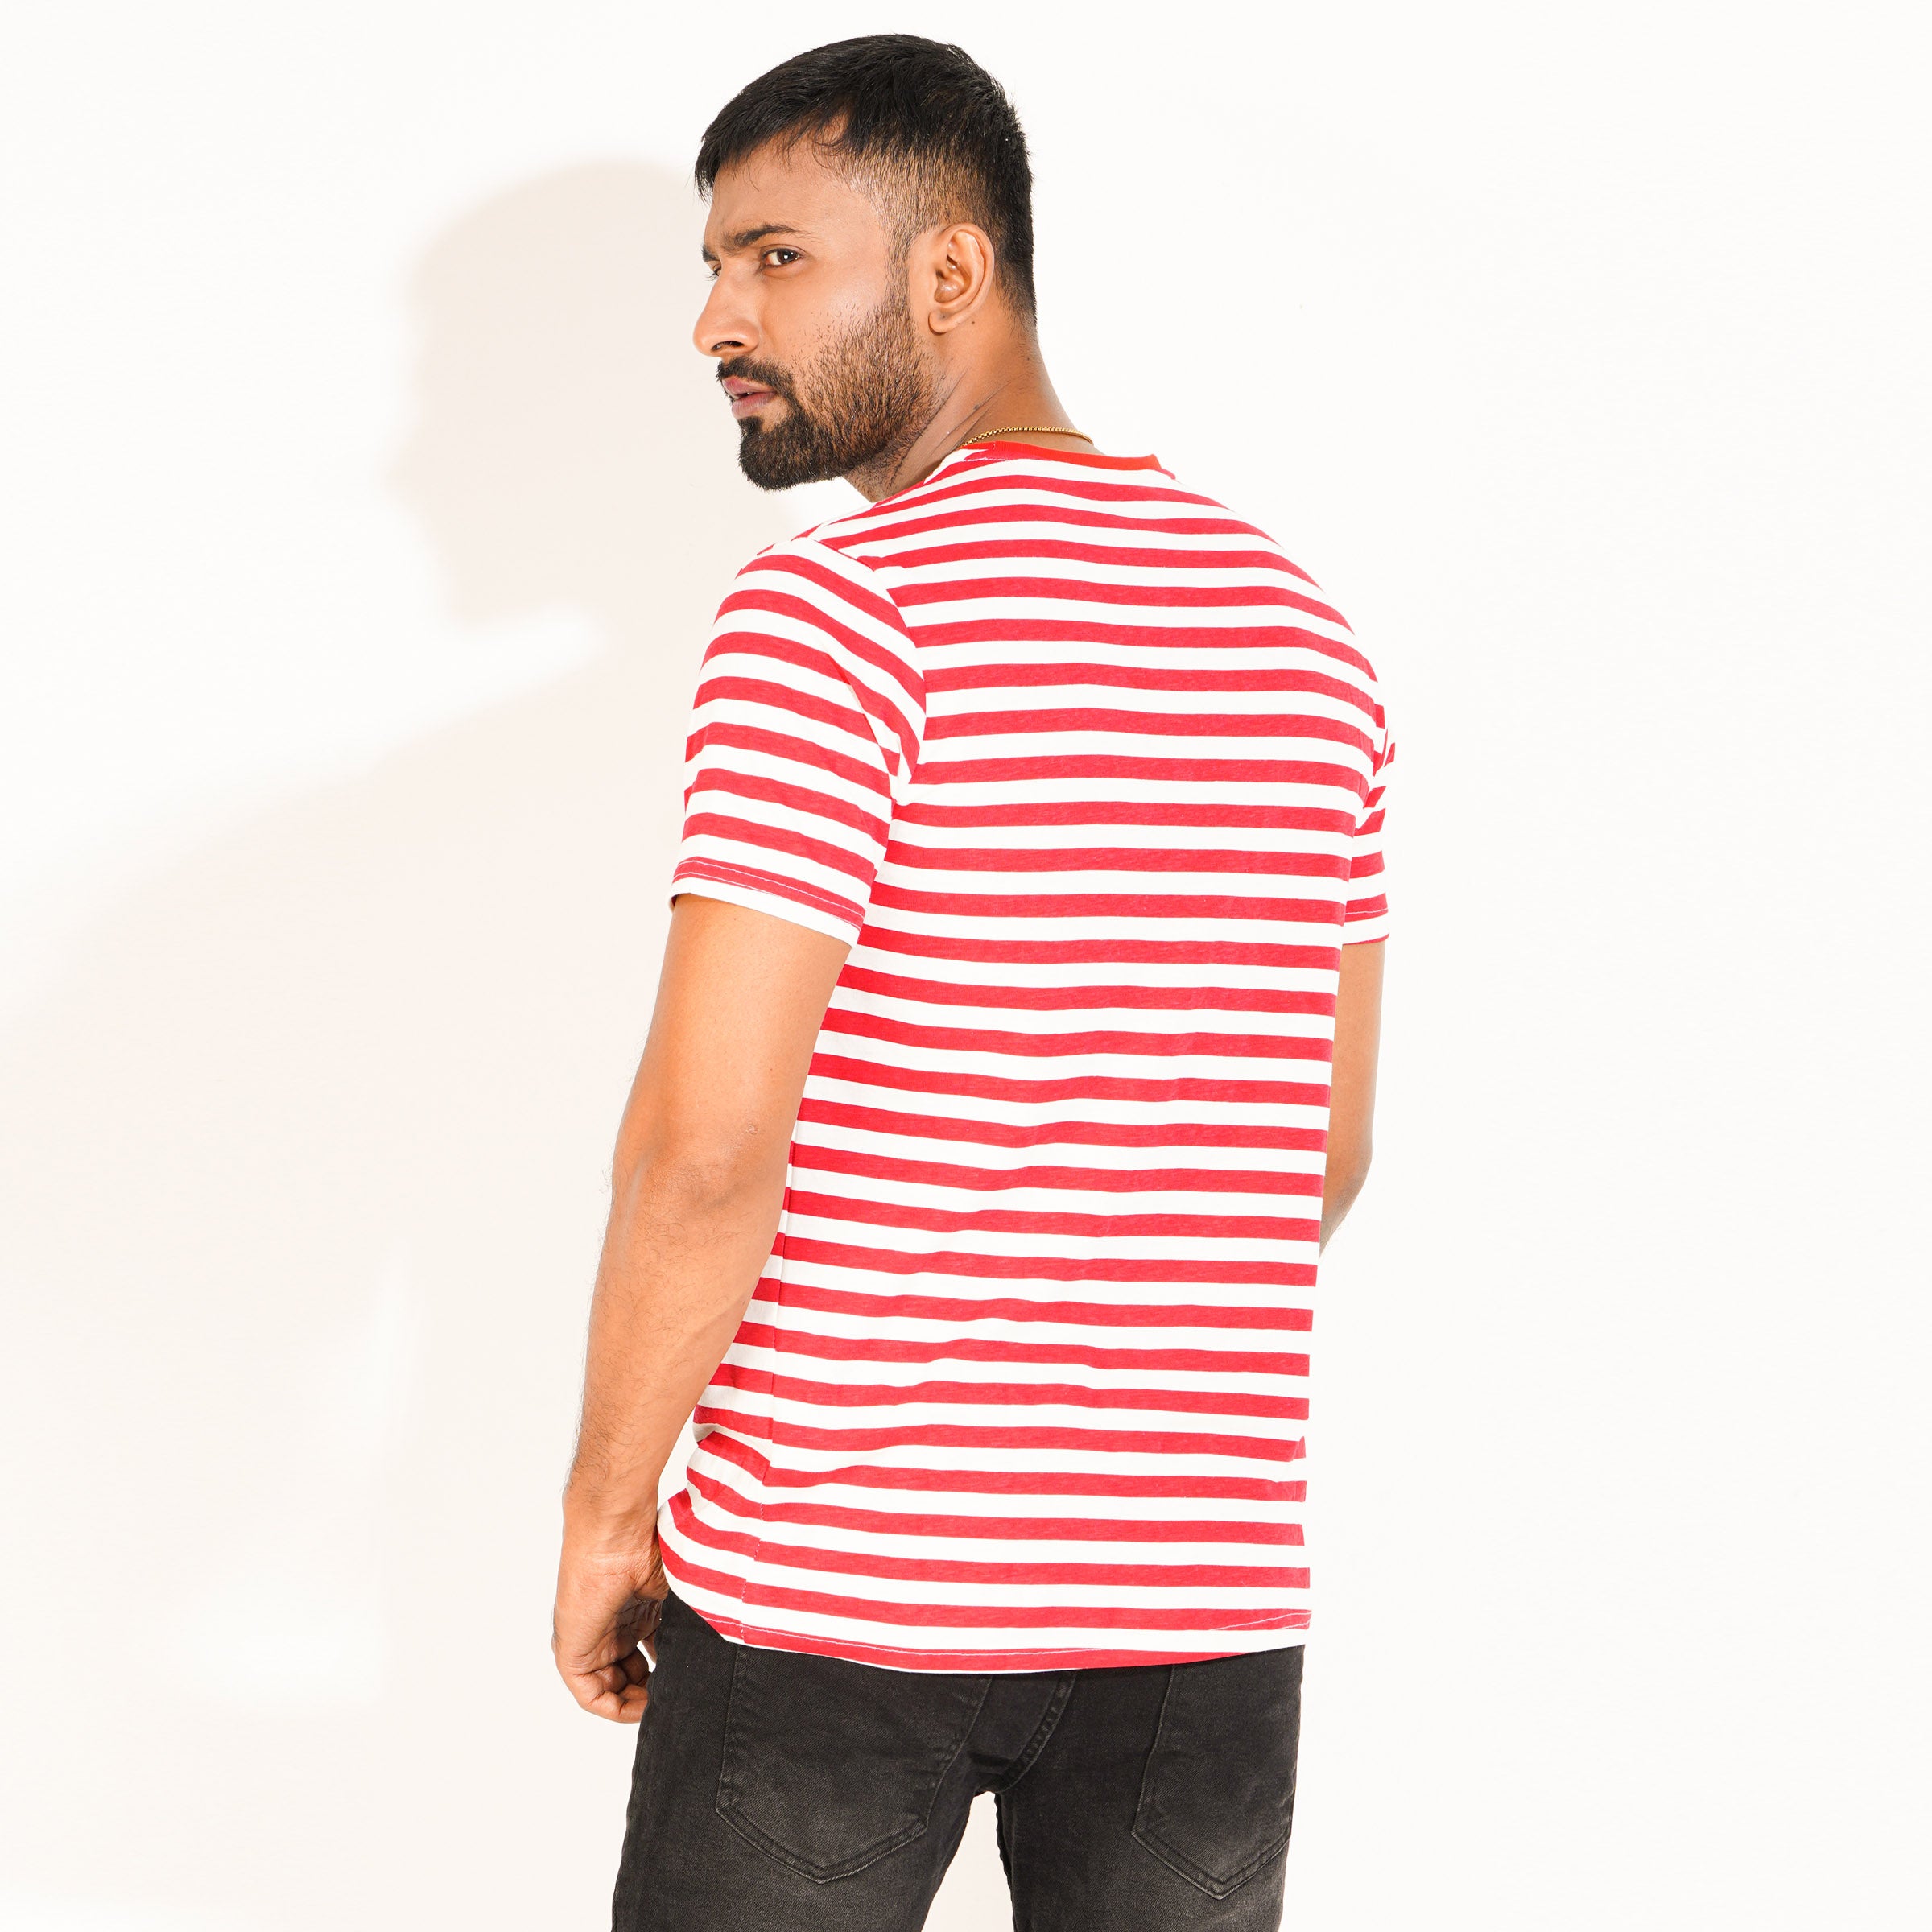 Stripe T-shirt - red & white